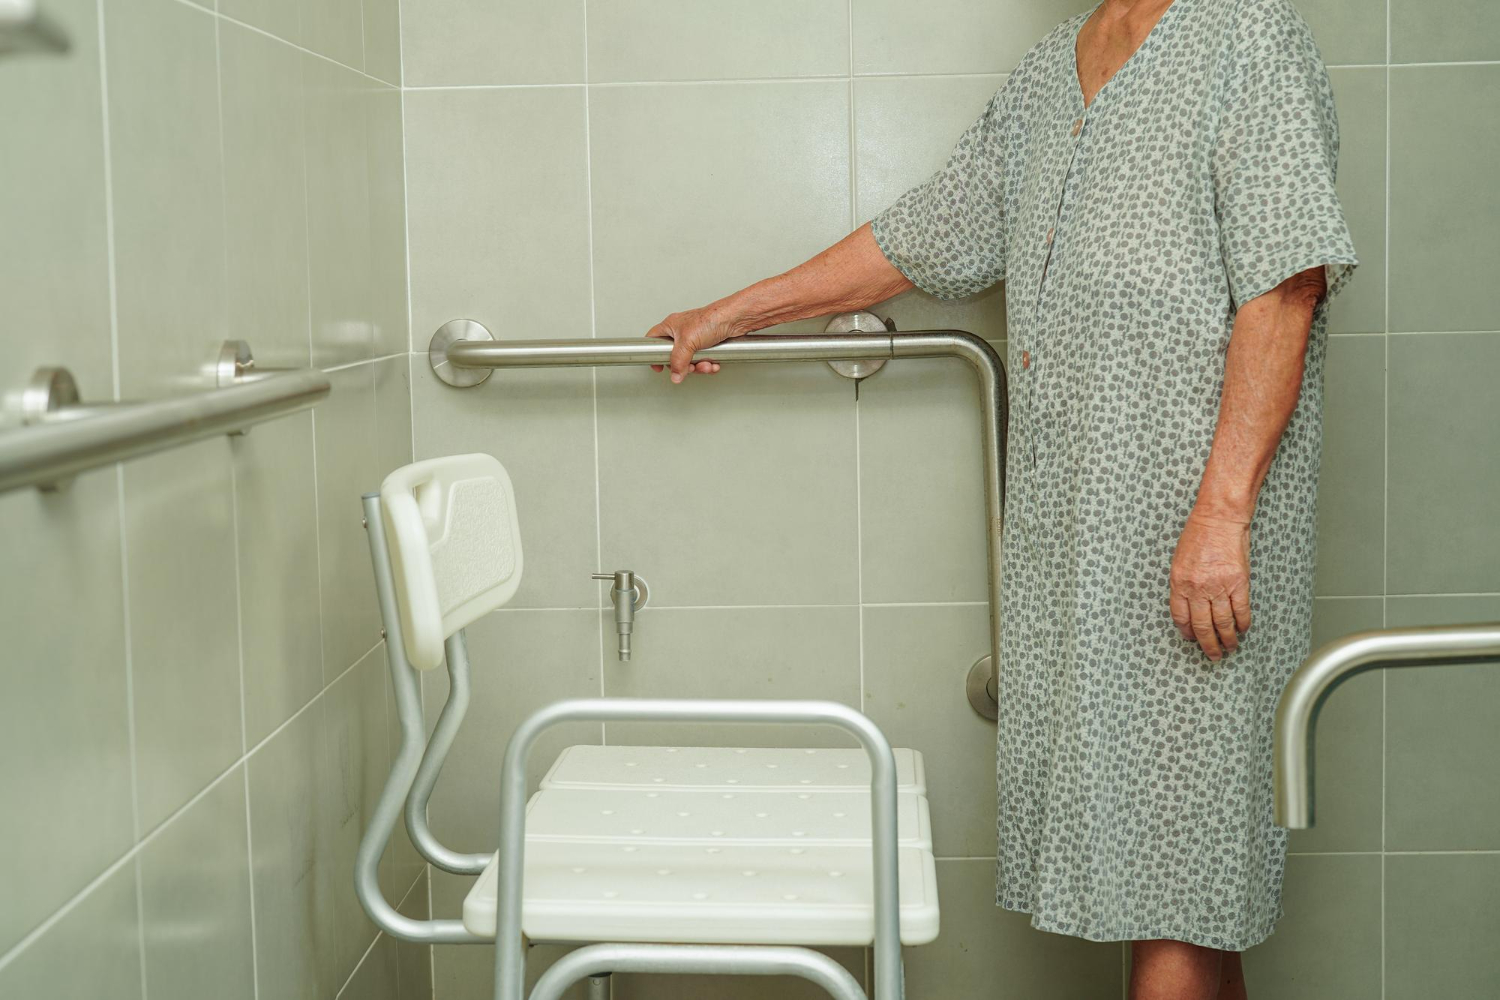 Top 10 Bathroom Accessories for Seniors